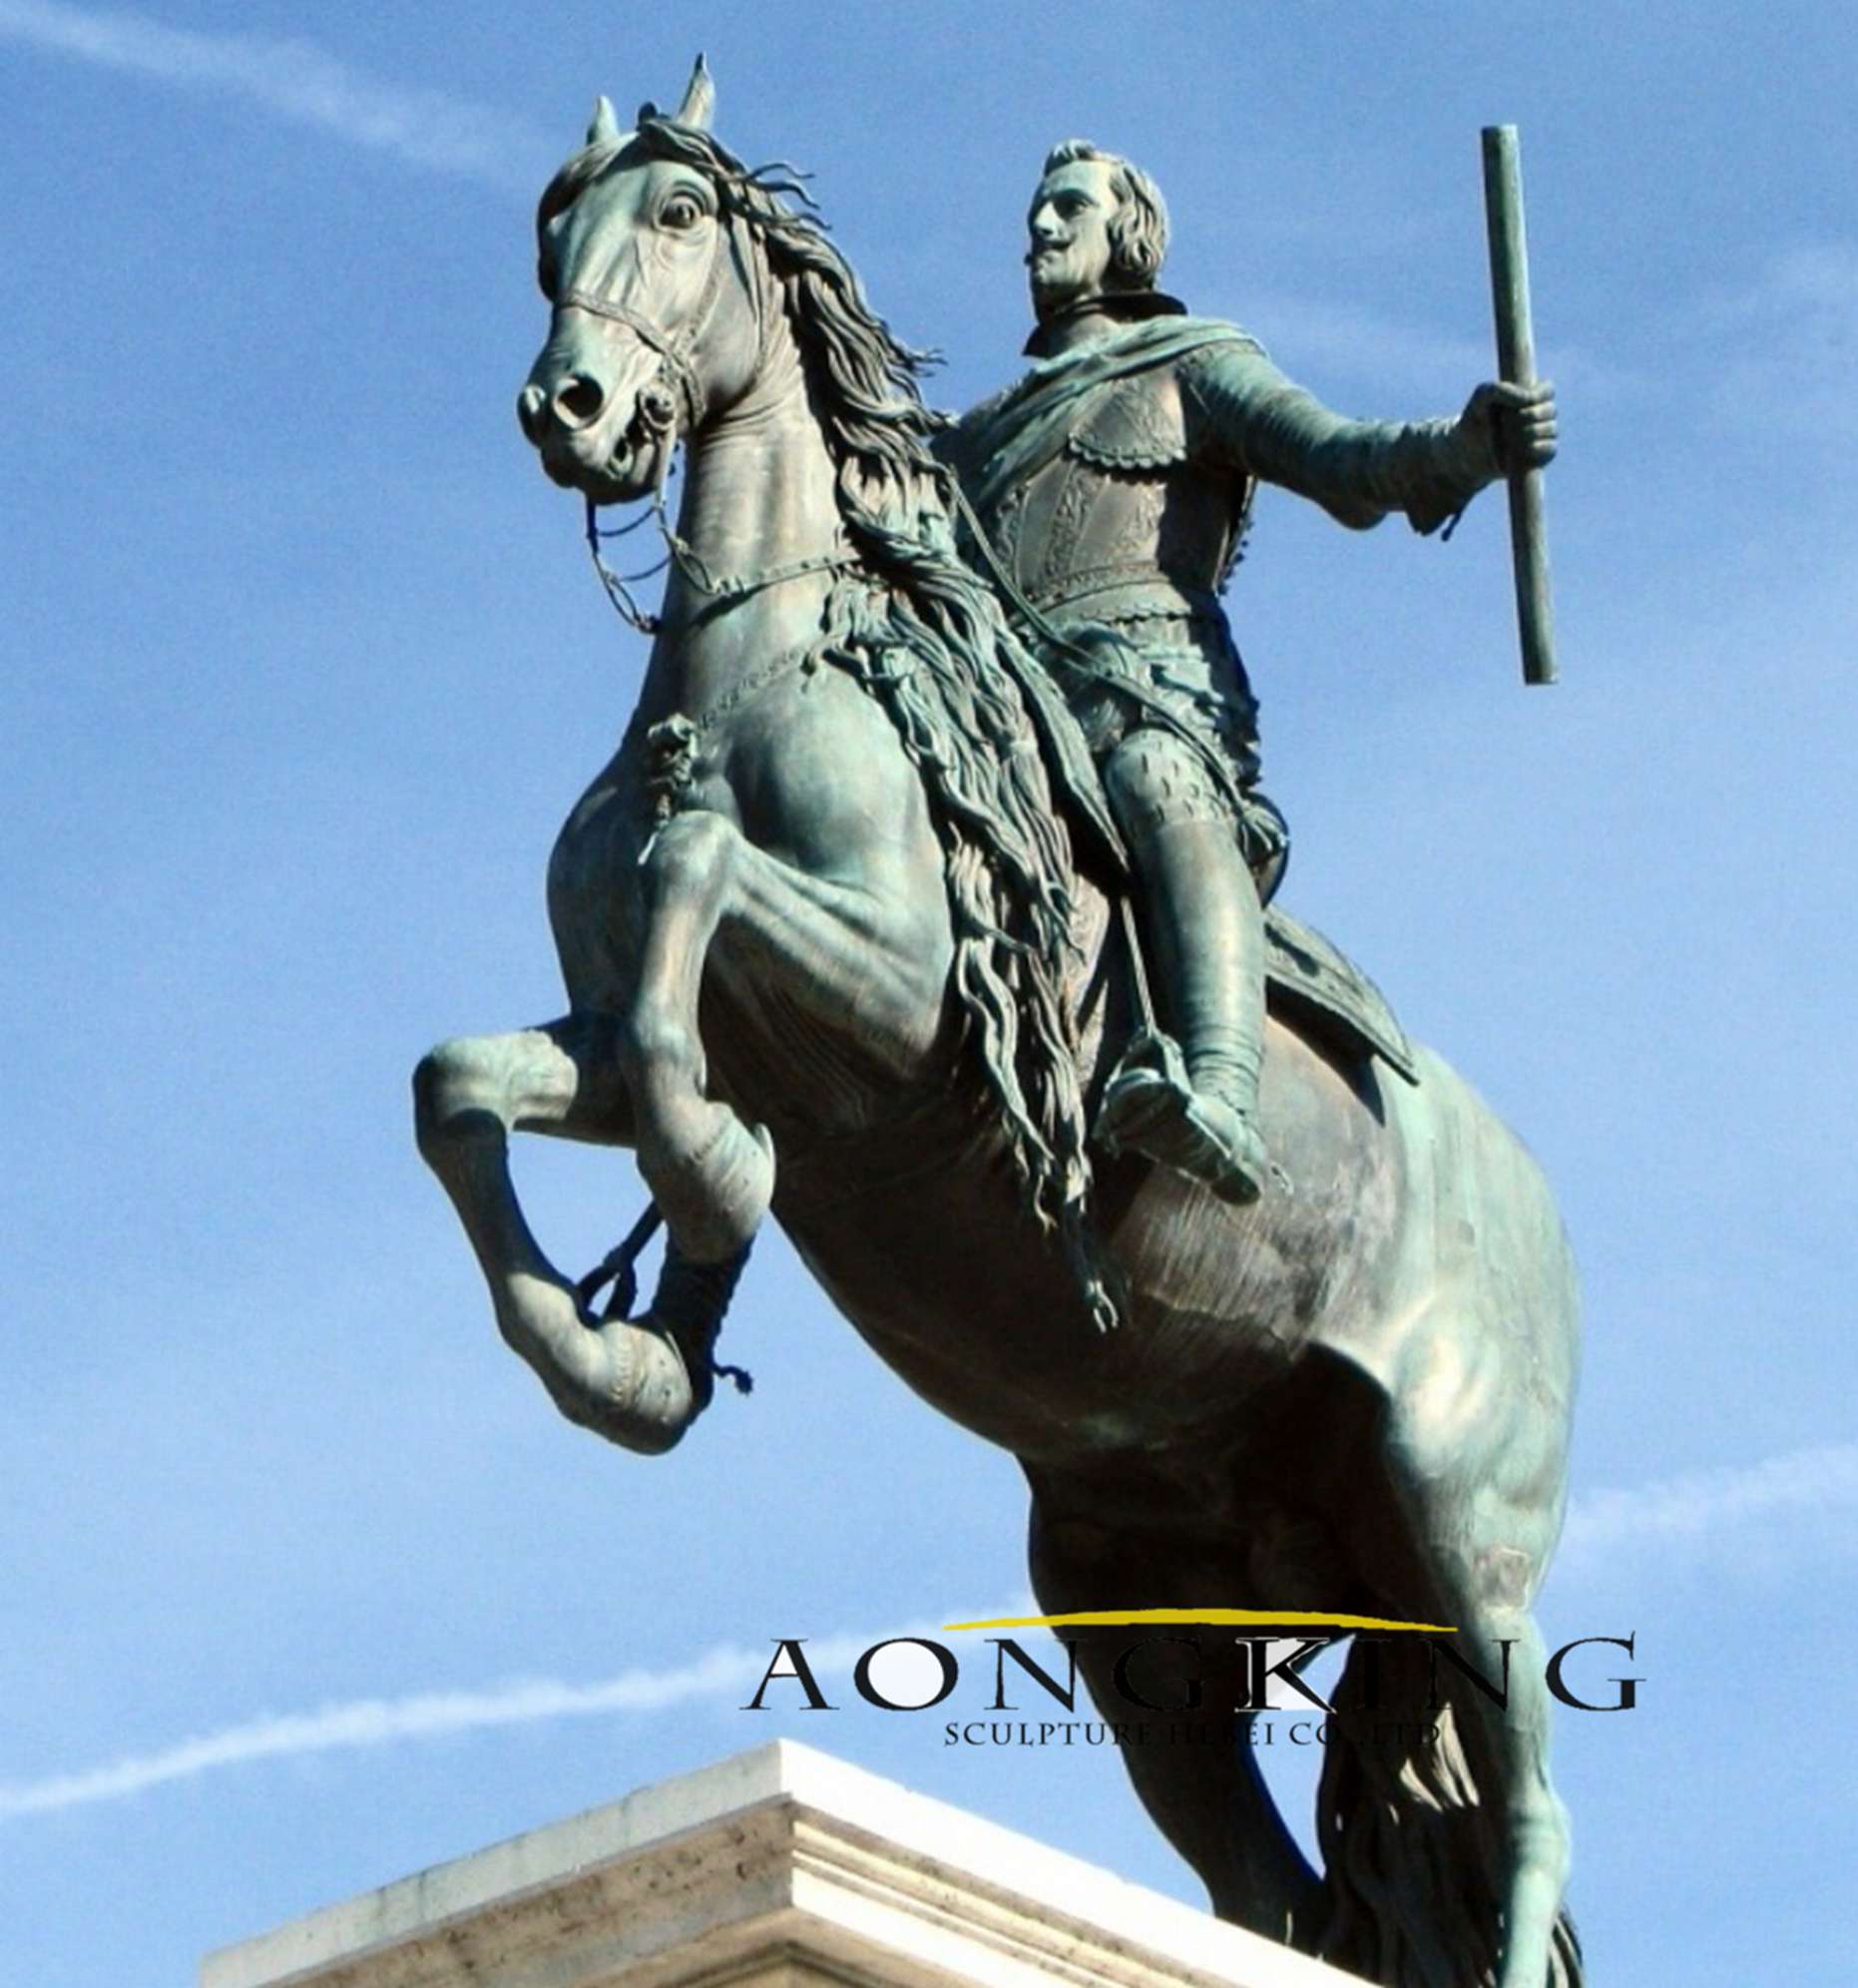 The statue equestrian Philip IV